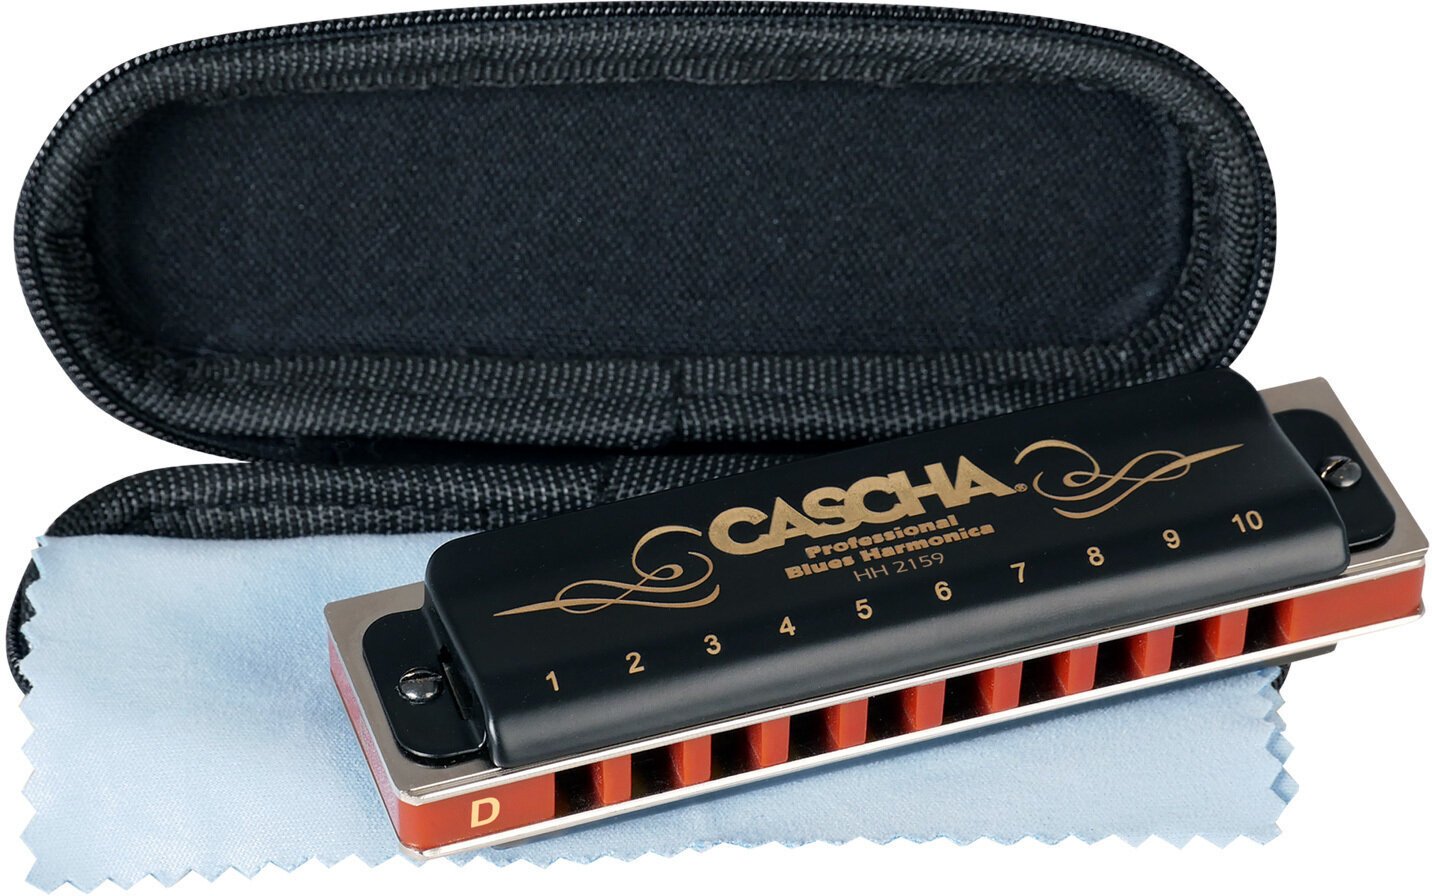 Diatonic harmonica Cascha HH 2159 Professional Blues D